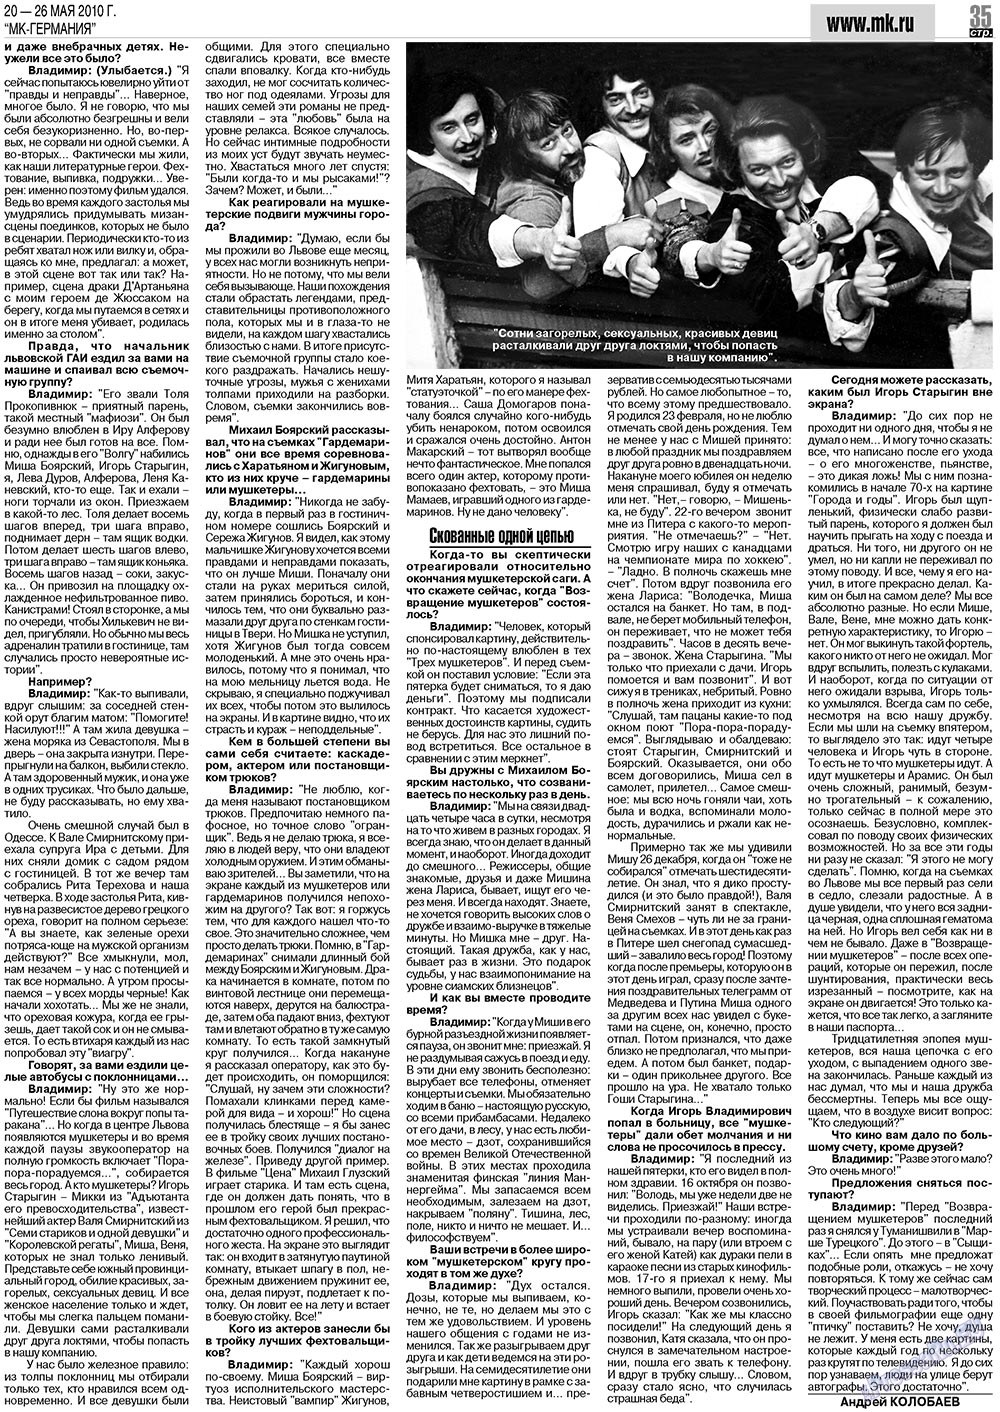 МК-Германия, газета. 2010 №21 стр.35